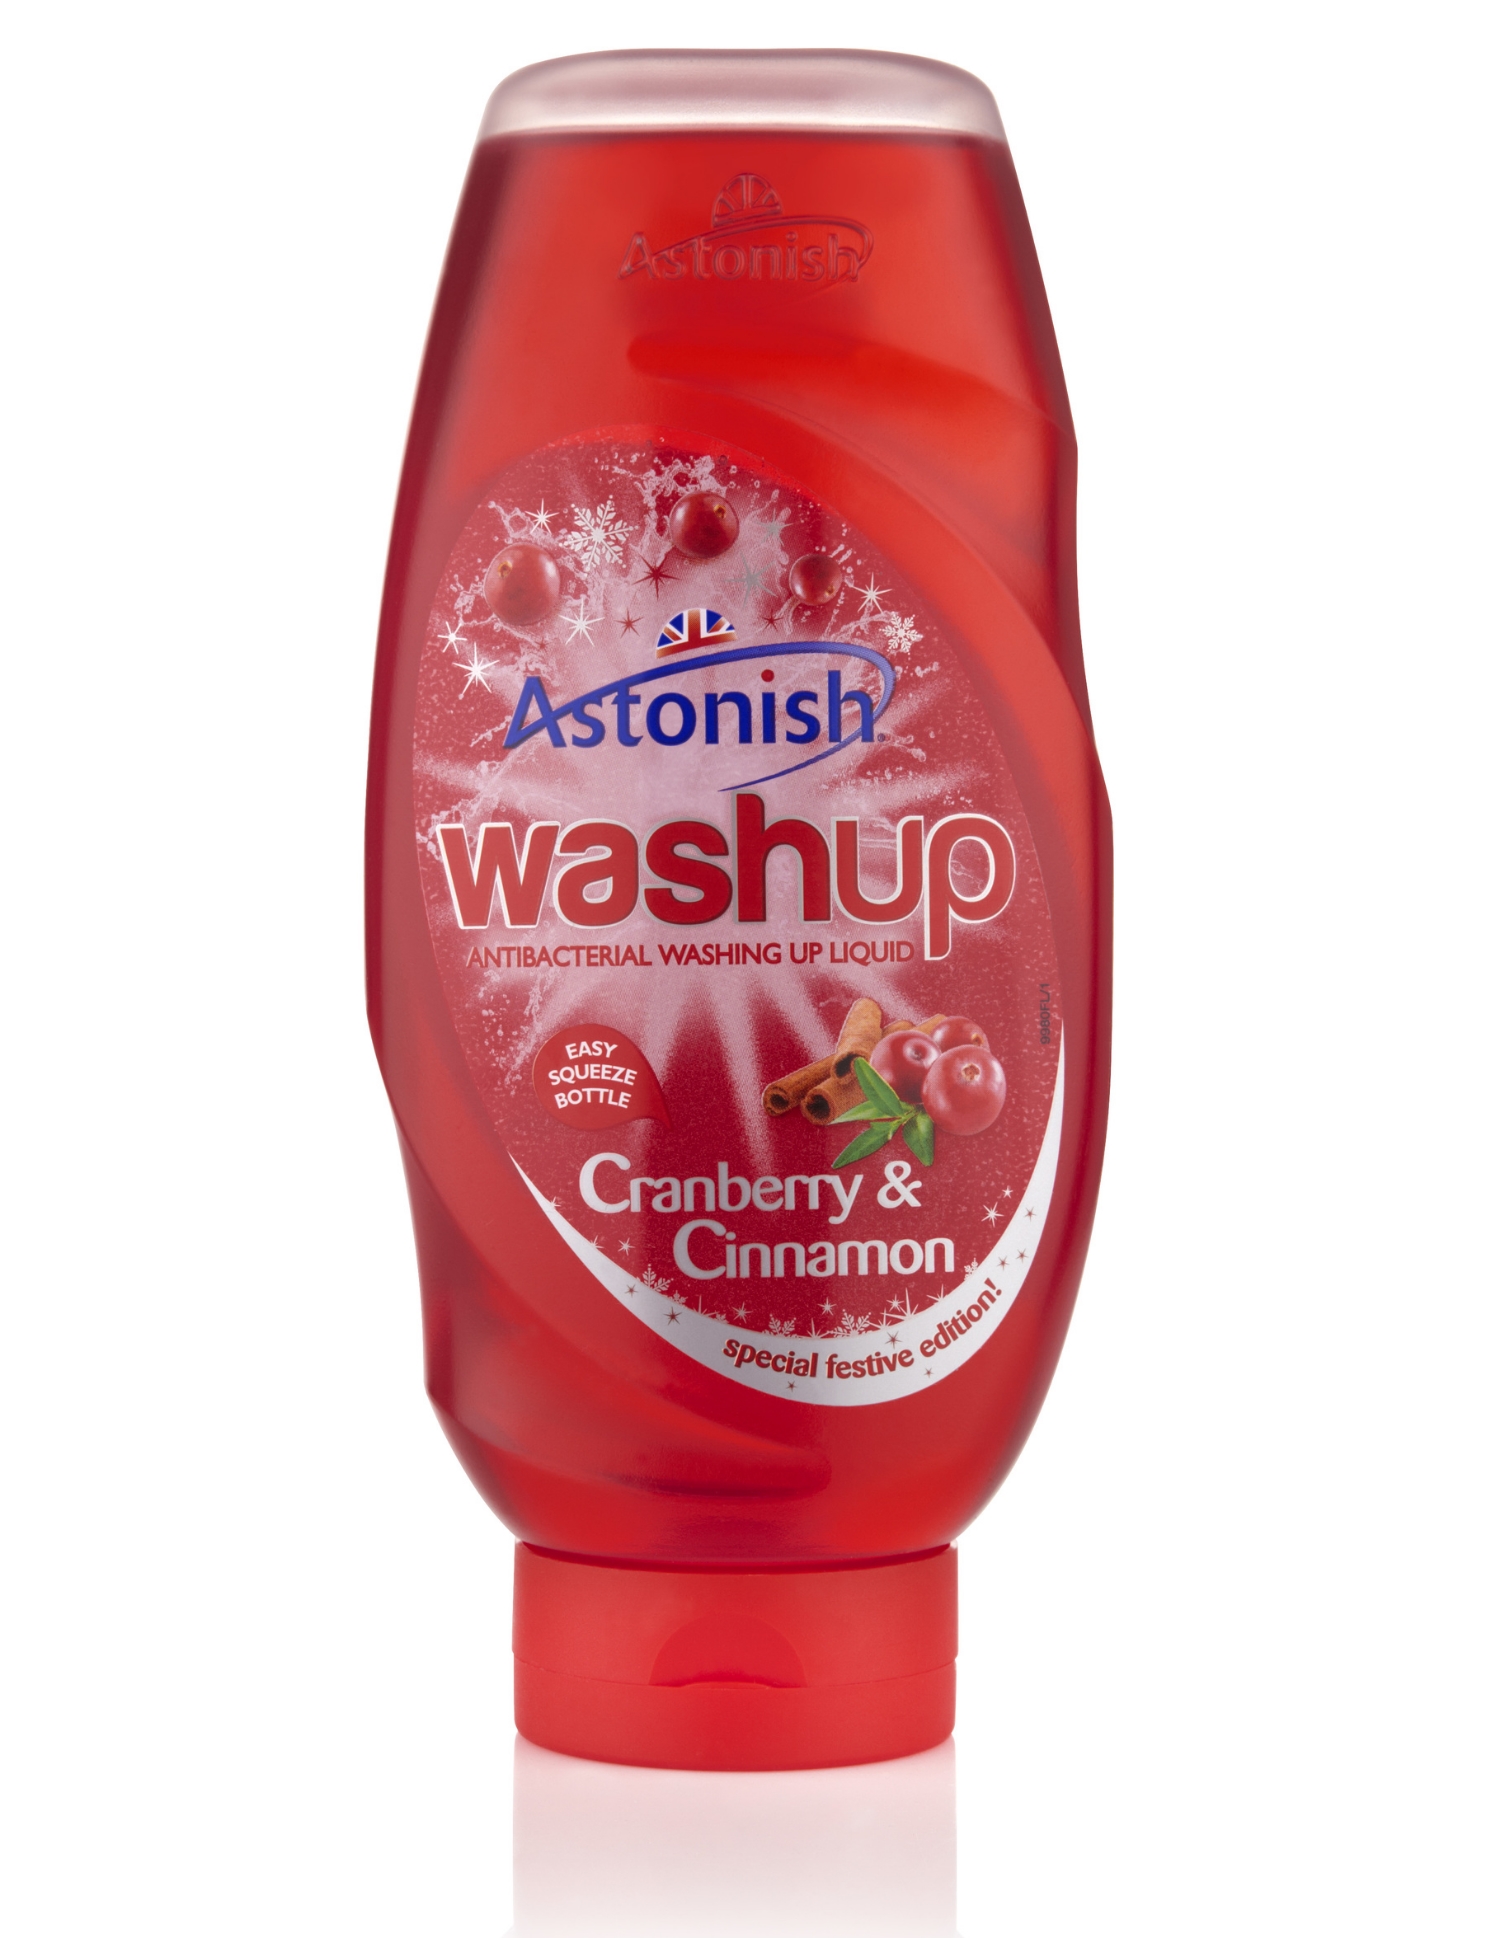 Astonish WashUp Cranberry Cinnamon Festive Edition 600ml.jpg